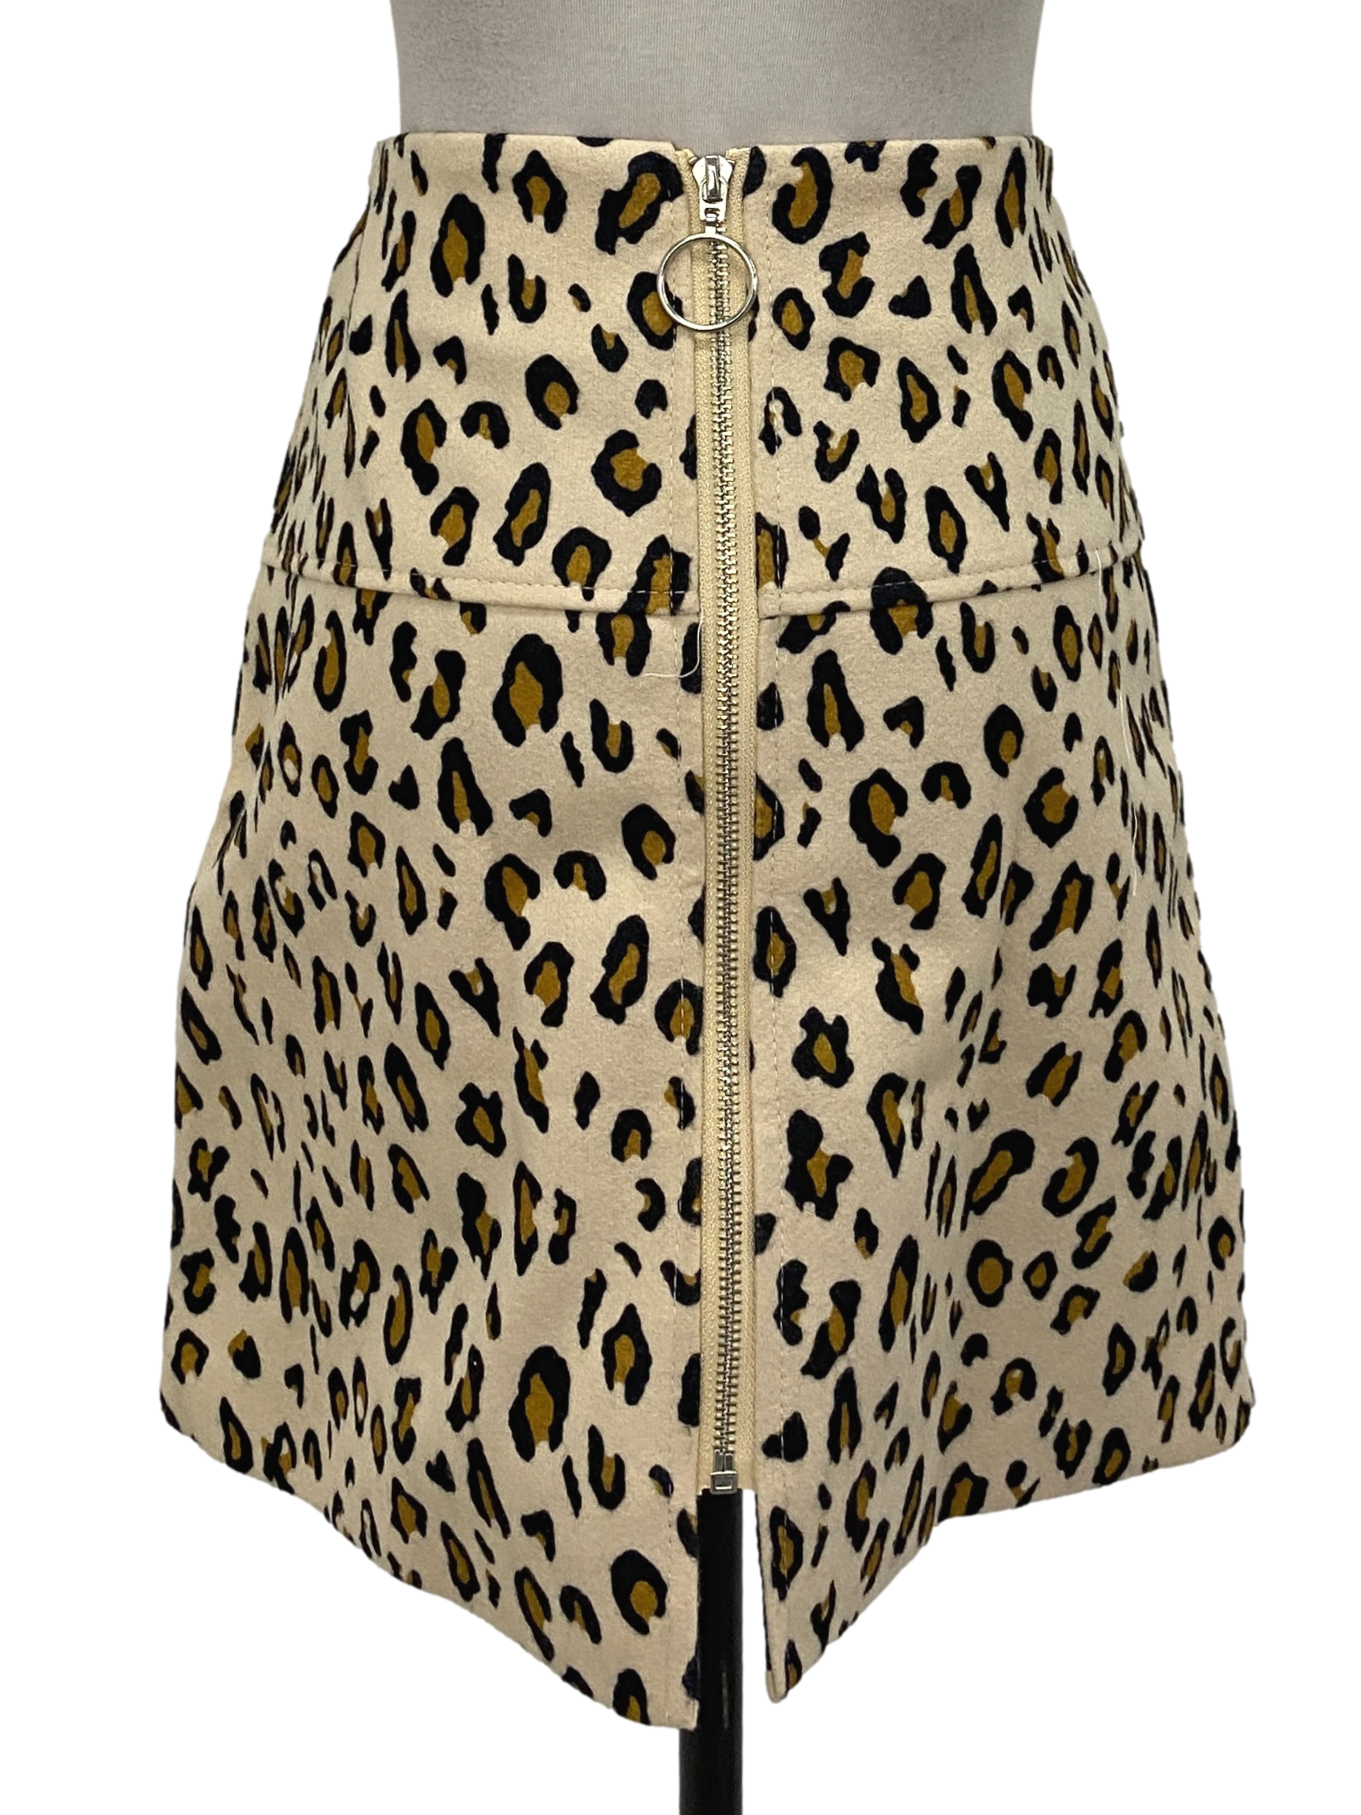 Nude Cheetah Print Skirt